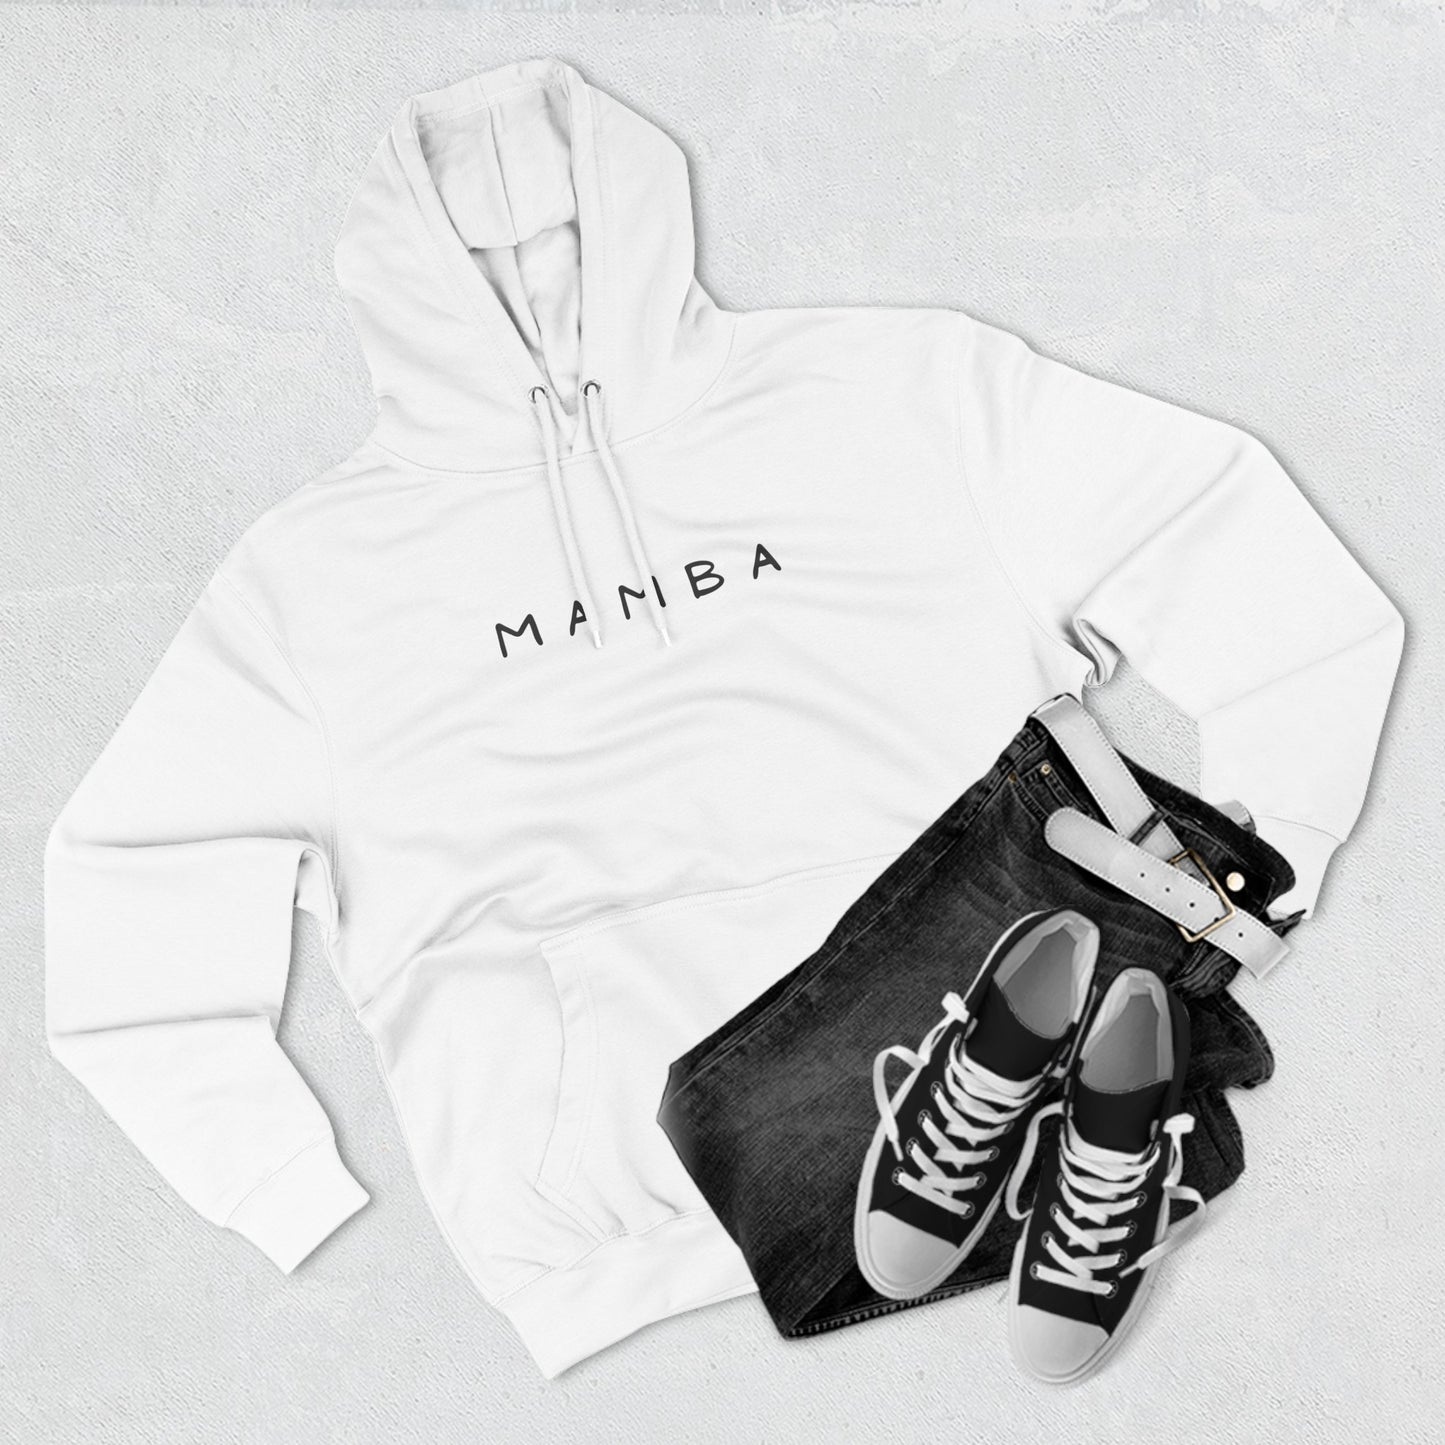 Mamba Spirit Kobe Bryant Tribute Hoodie - Premium Fleece Pullover for Ultimate Warmth and Style